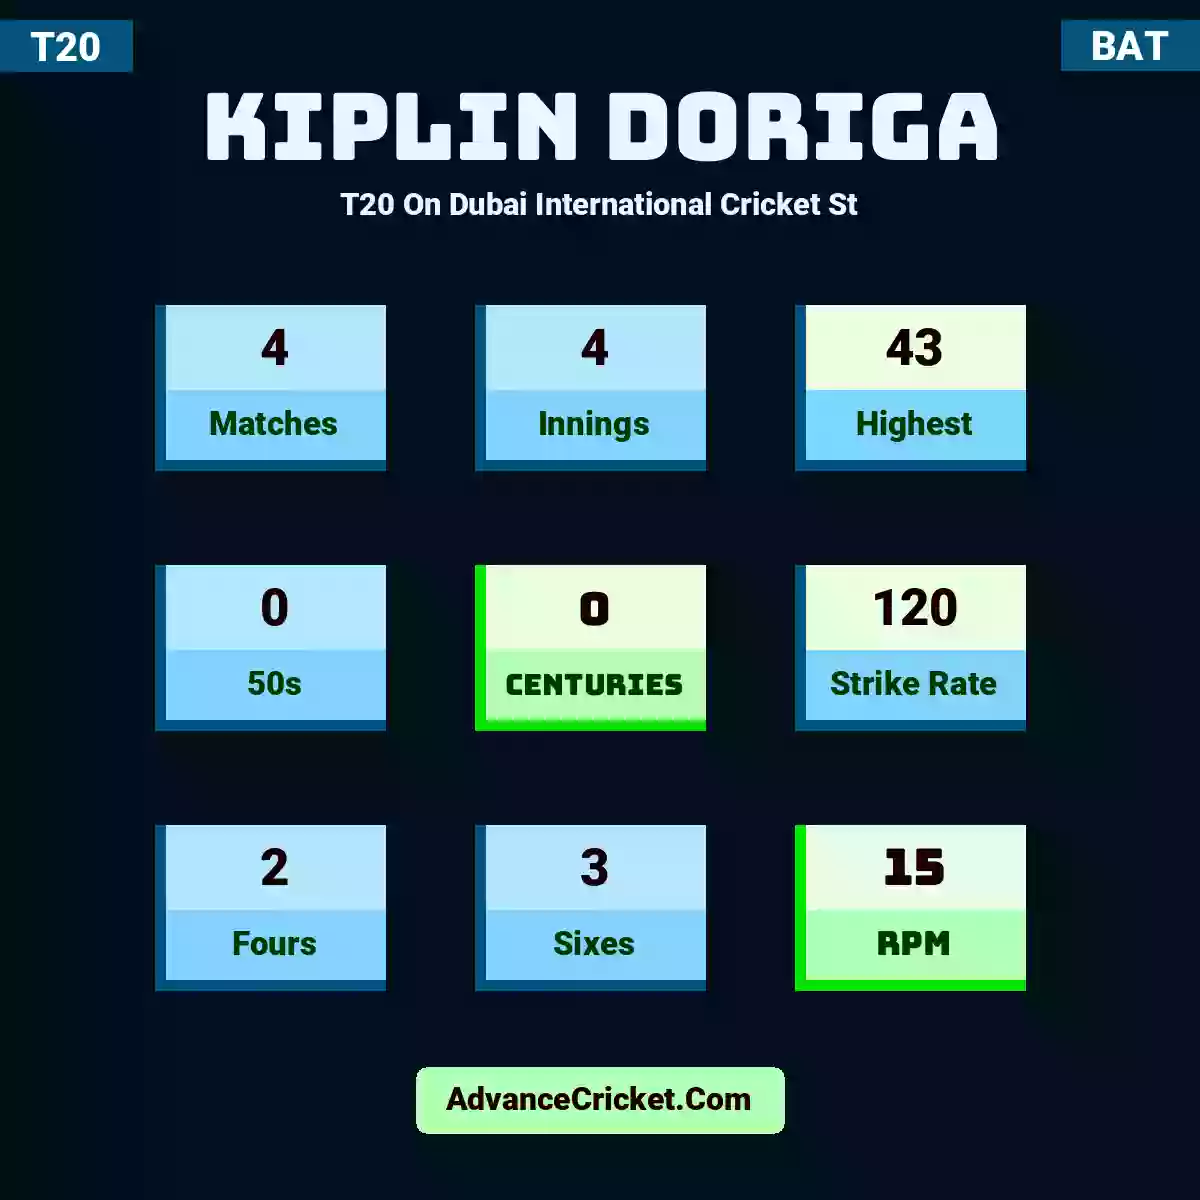 Kiplin Doriga T20  On Dubai International Cricket St, Kiplin Doriga played 4 matches, scored 43 runs as highest, 0 half-centuries, and 0 centuries, with a strike rate of 120. K.Doriga hit 2 fours and 3 sixes, with an RPM of 15.